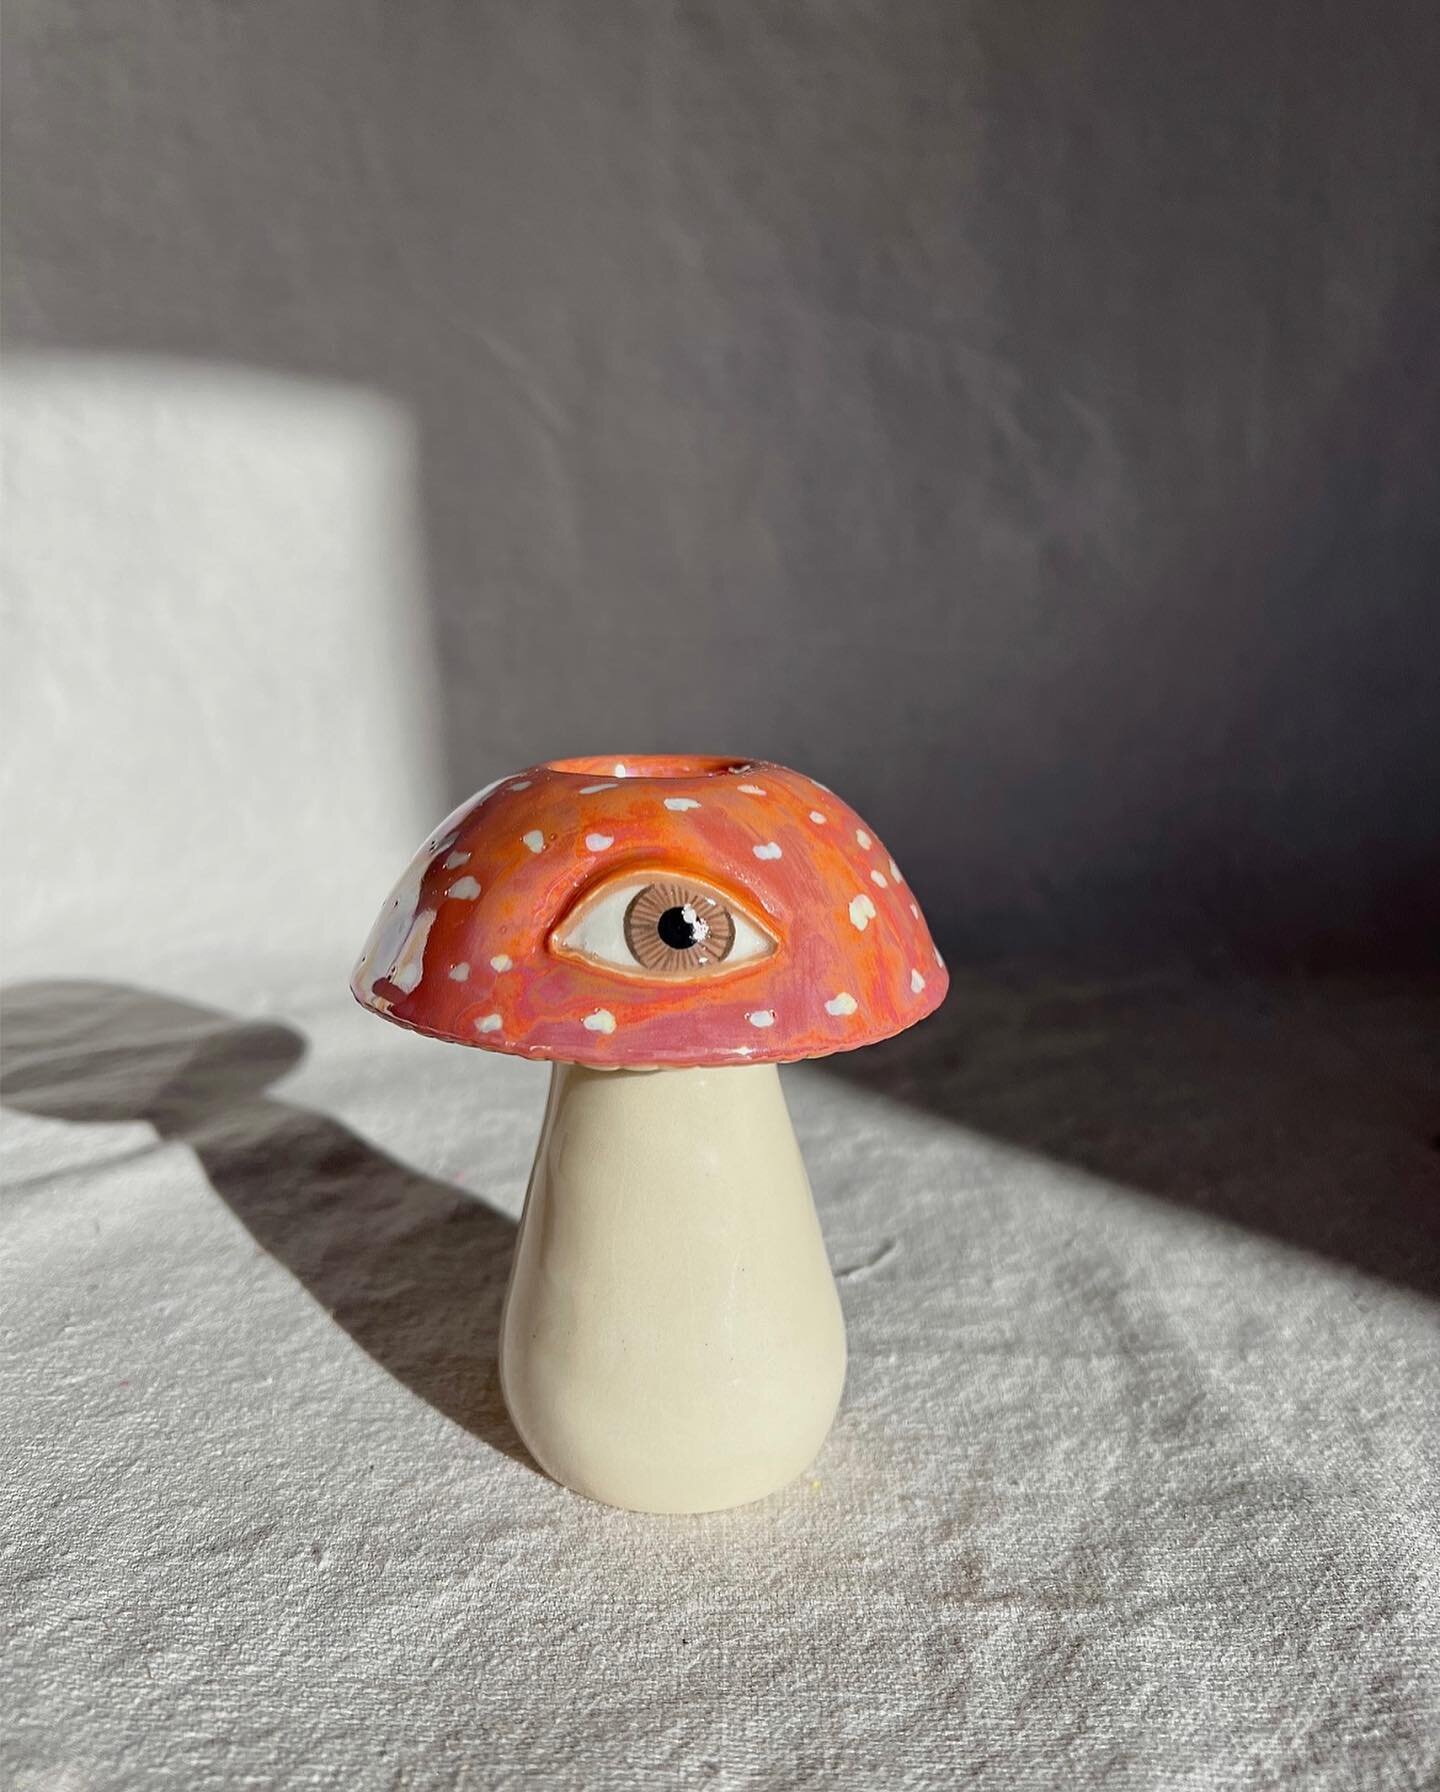 I think this mushroom friend is from wonderland. 
🤪
✨
🍄
.
.
#wonderland #aliceandwonderlandtheme #strangeart #eyeseeyou #ilovemushrooms #mushroomsculpture #ceramicart